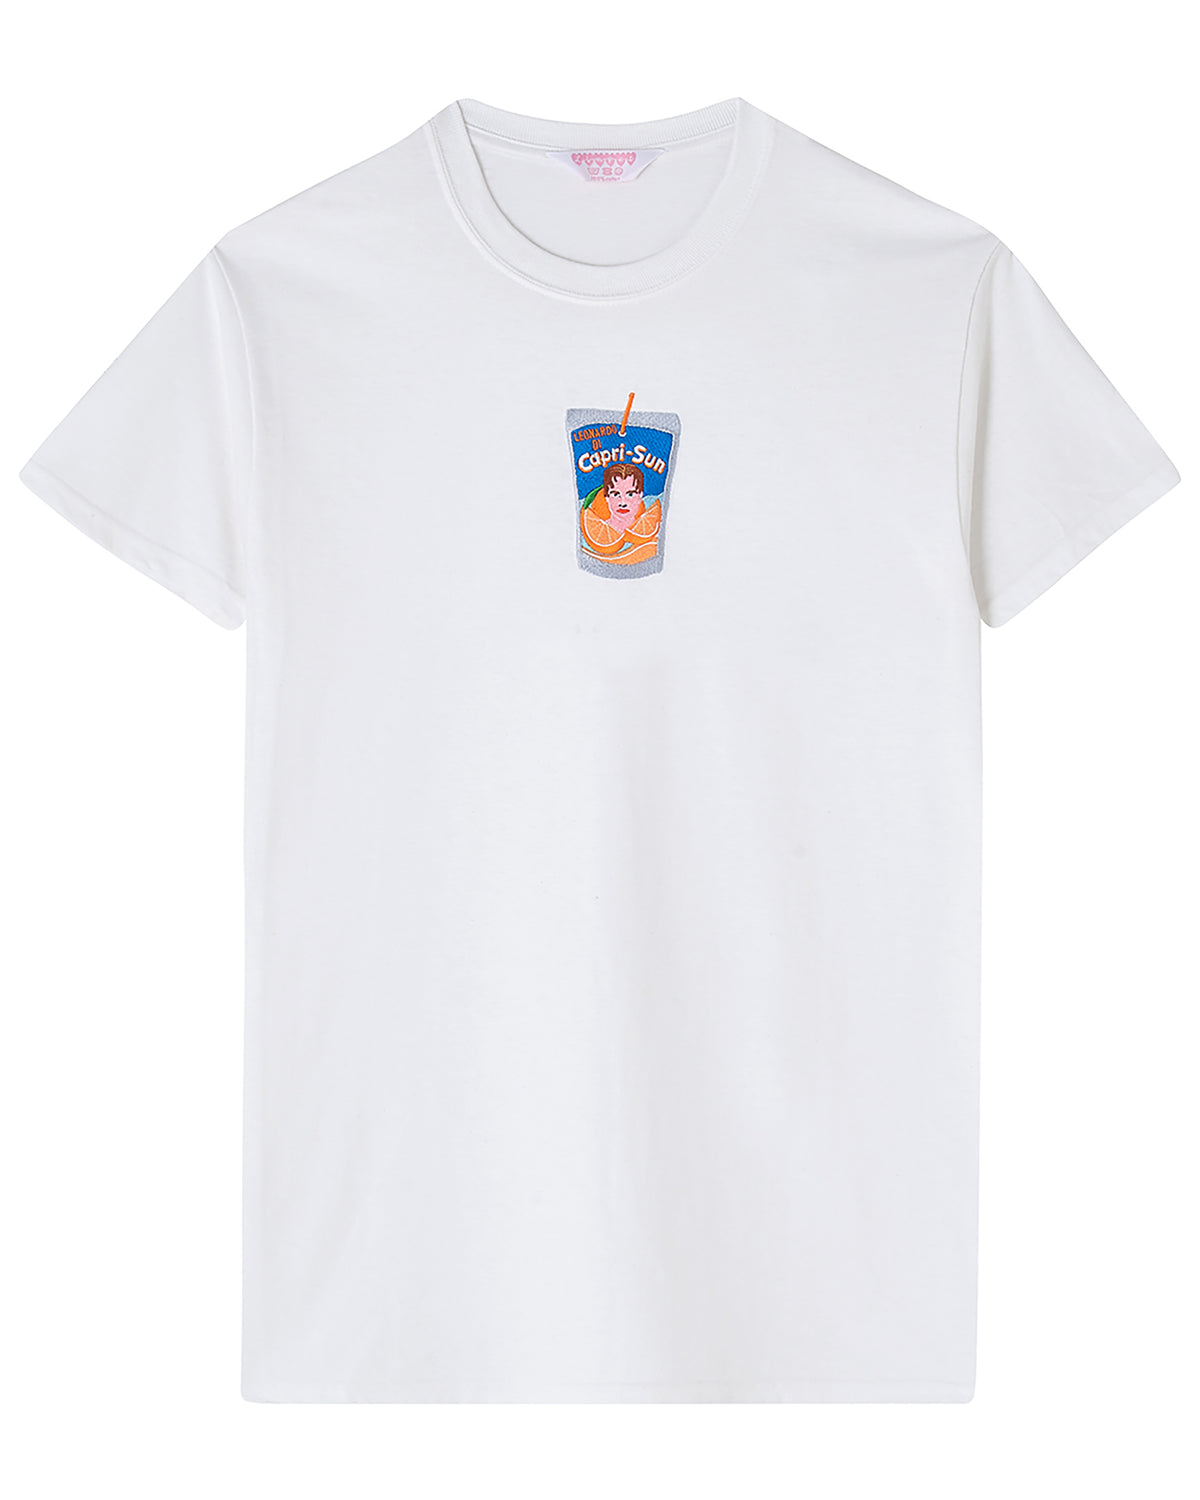 Leonardo DiCapriSun Embroidered T-Shirt